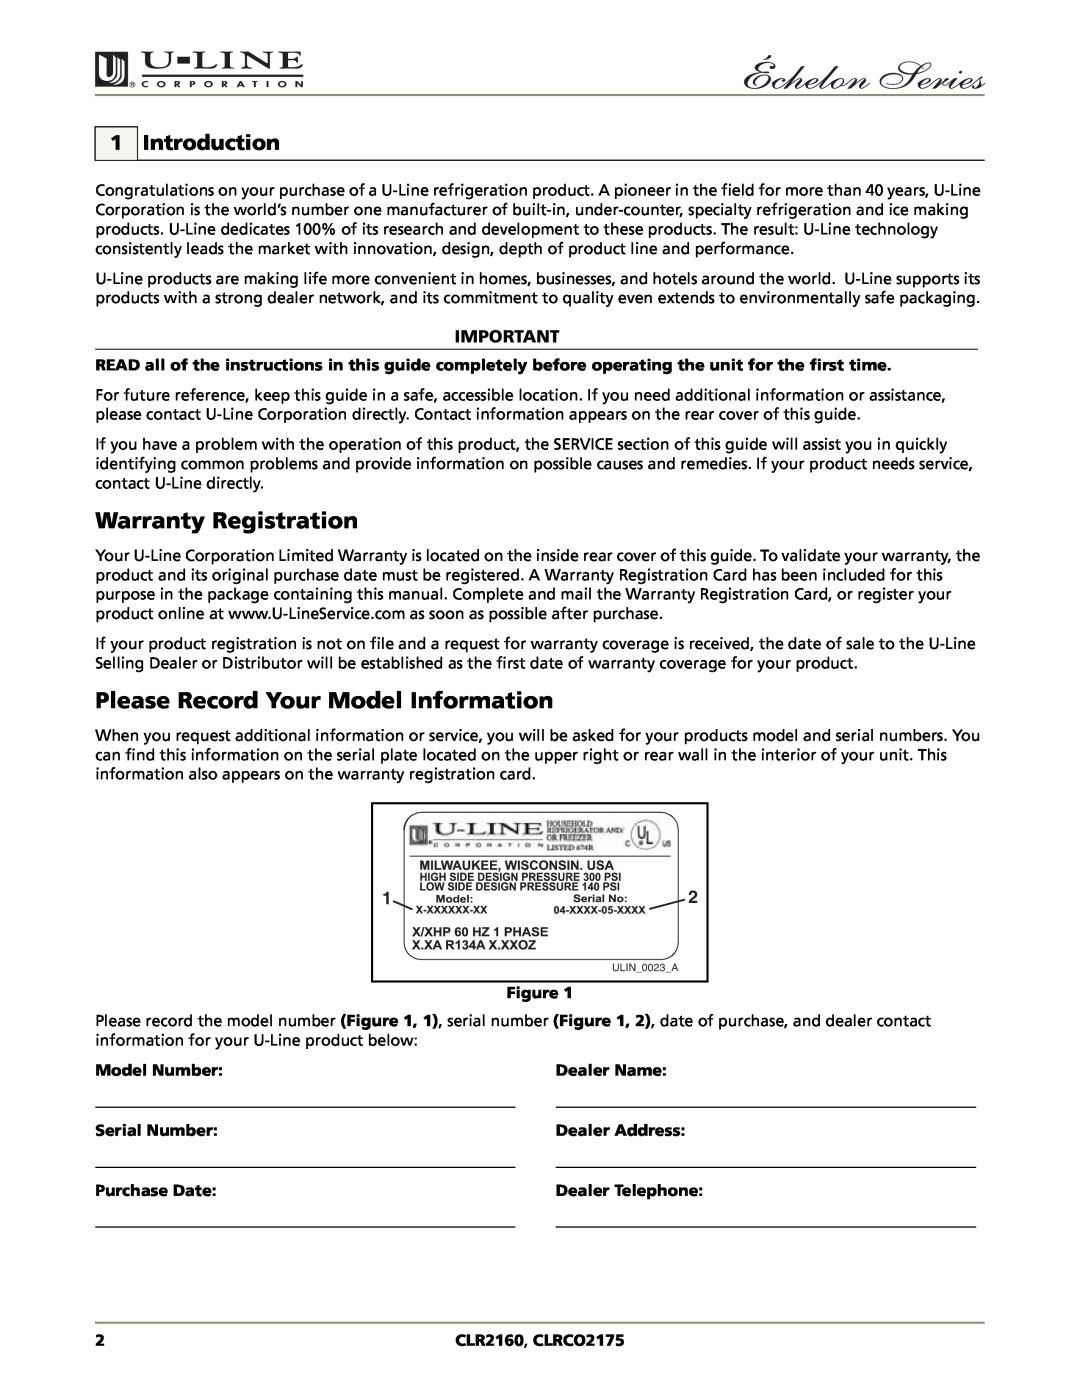 U-Line CLRCO2175, CLR2160 manual Warranty Registration, Please Record Your Model Information, Introduction 